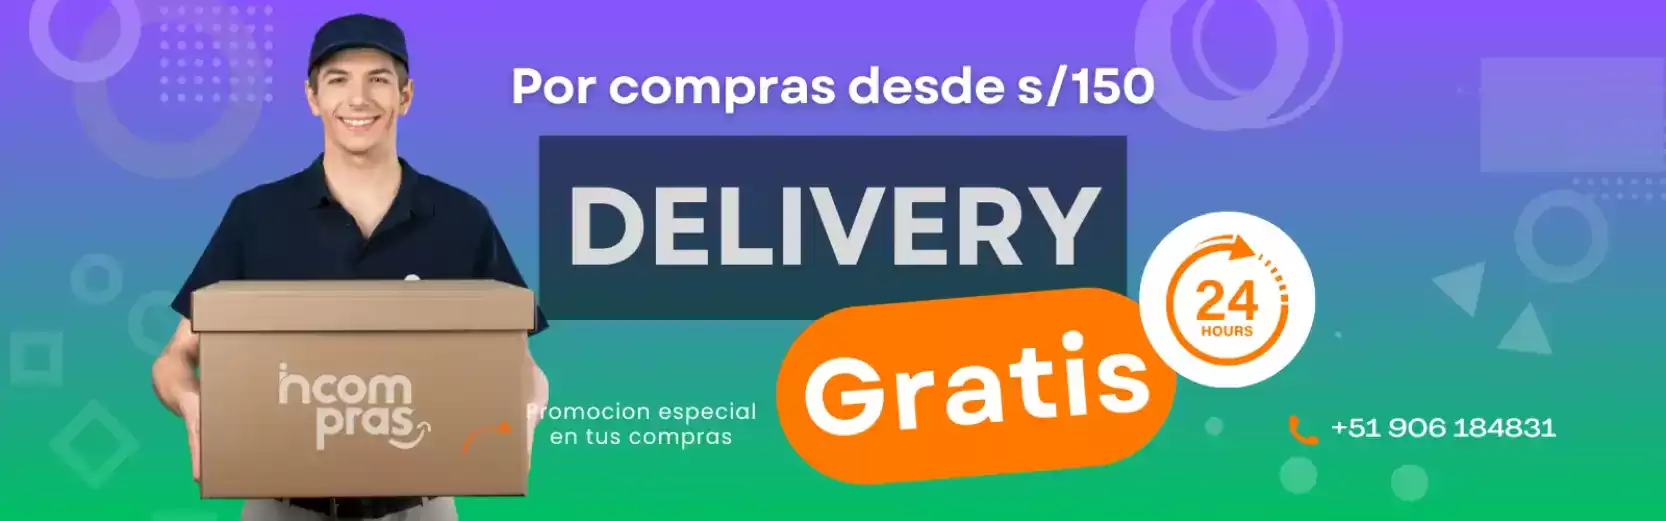 delivery gratis